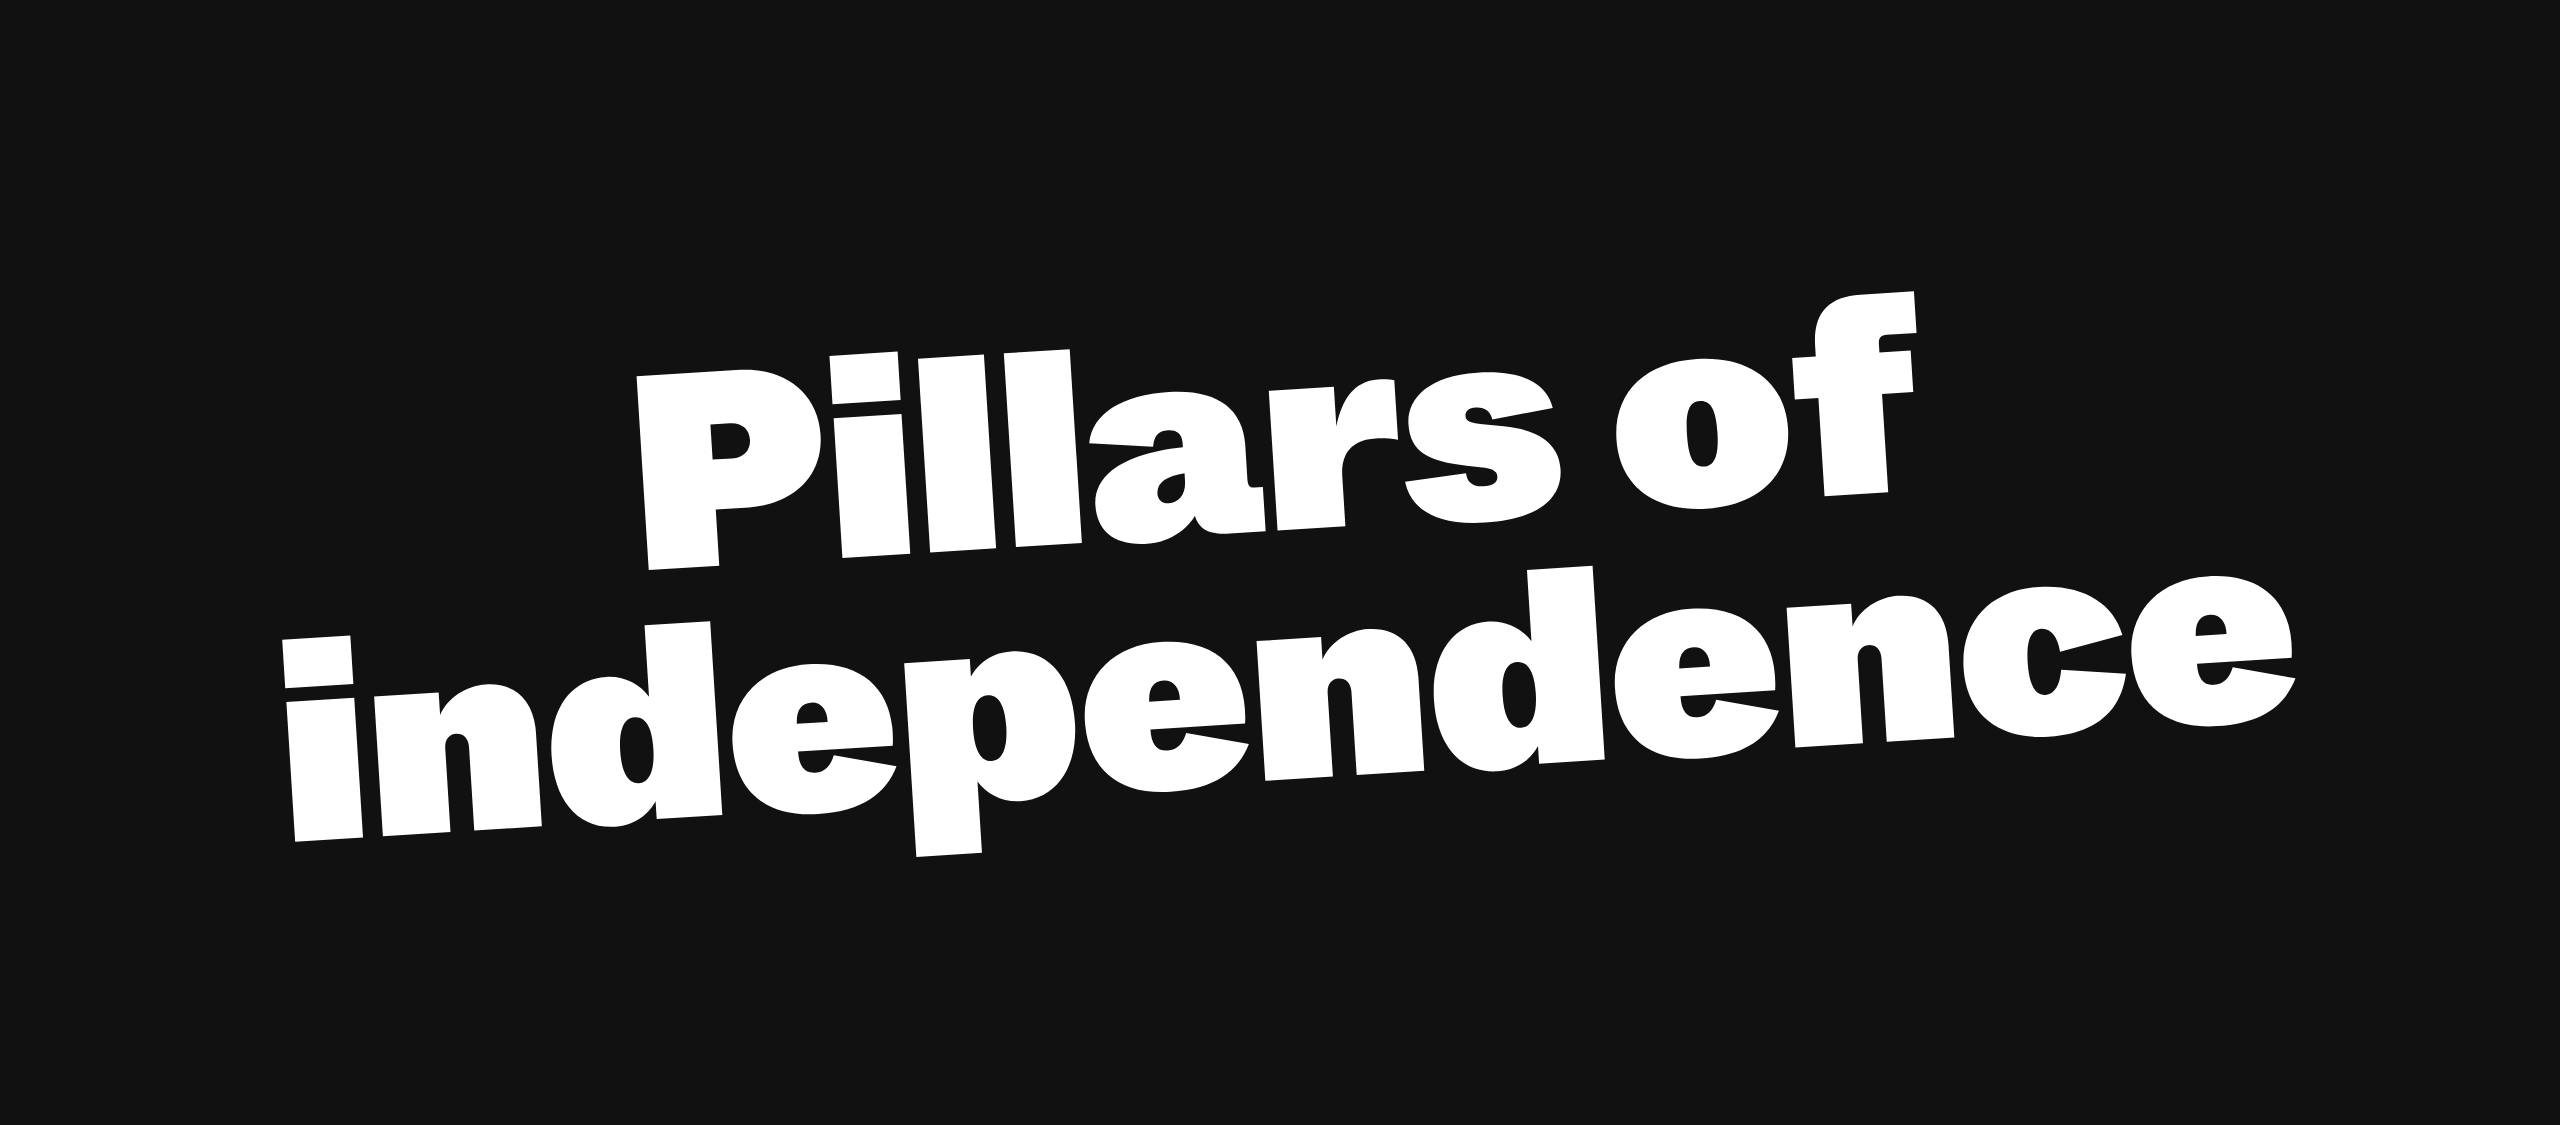 Pillars of independence